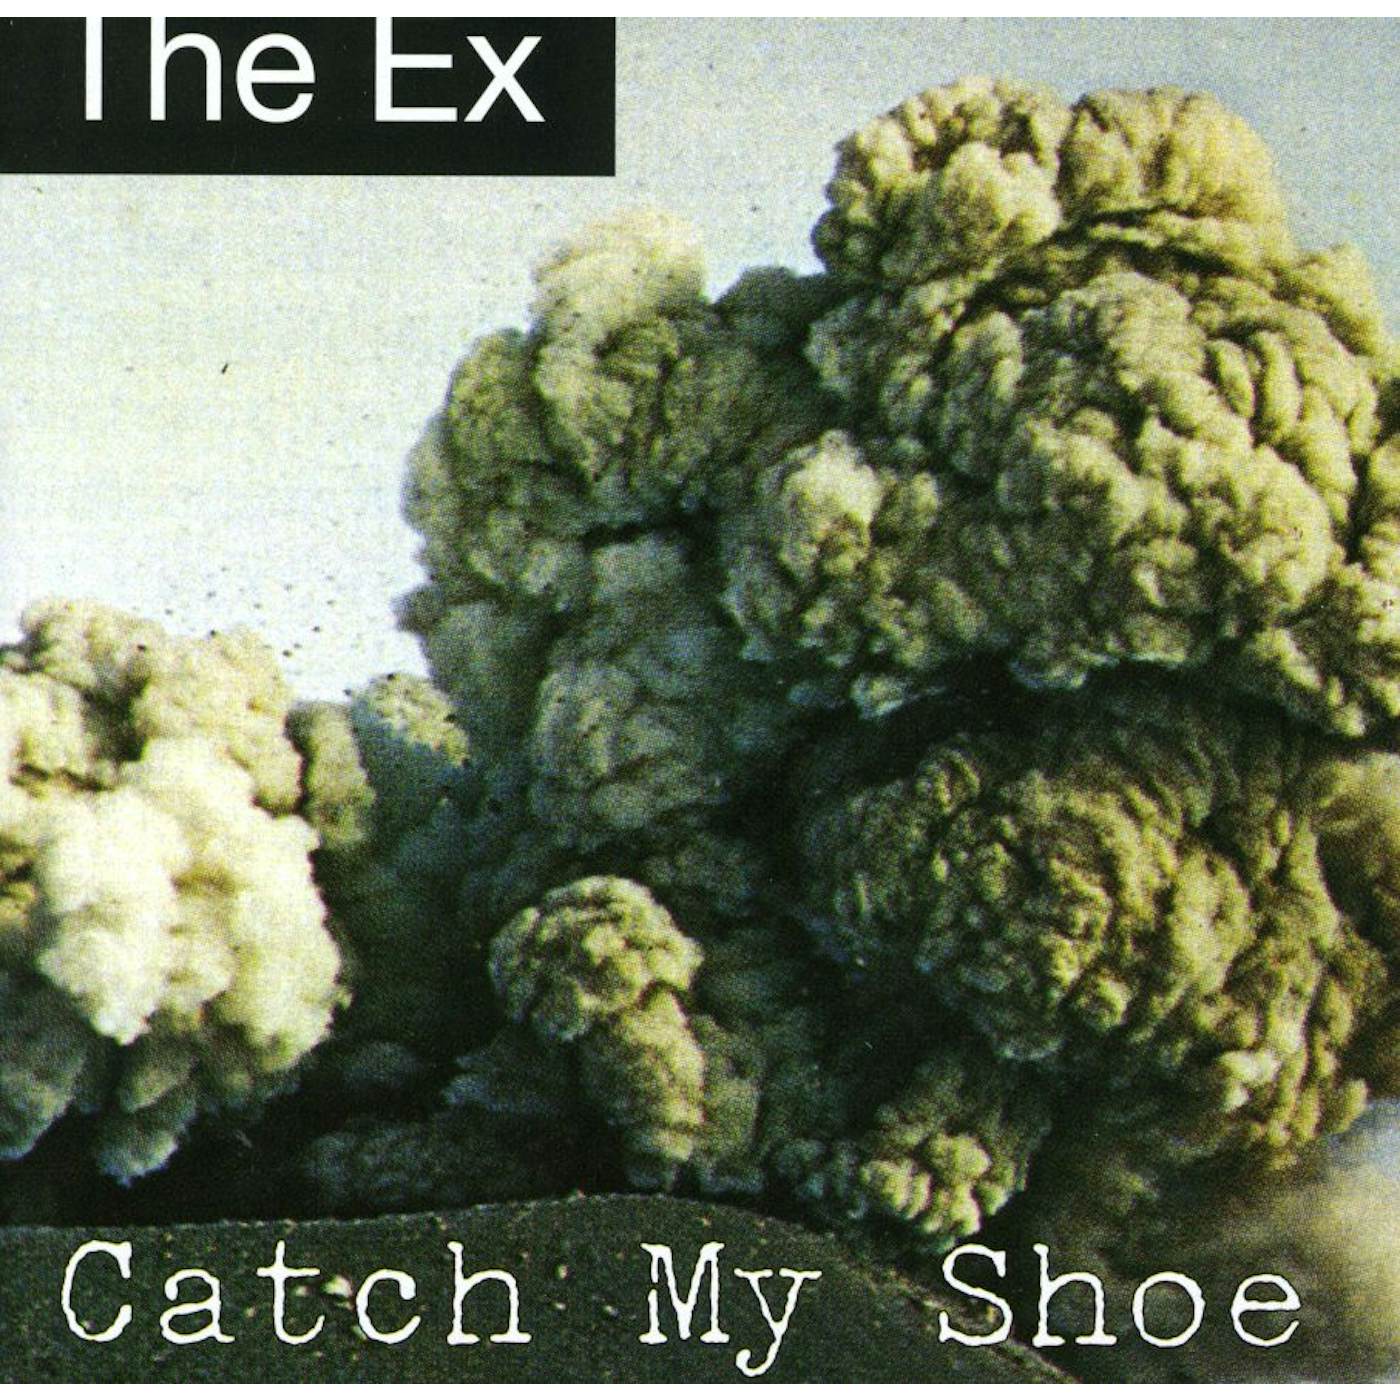 Ex CATCH MY SHOE CD